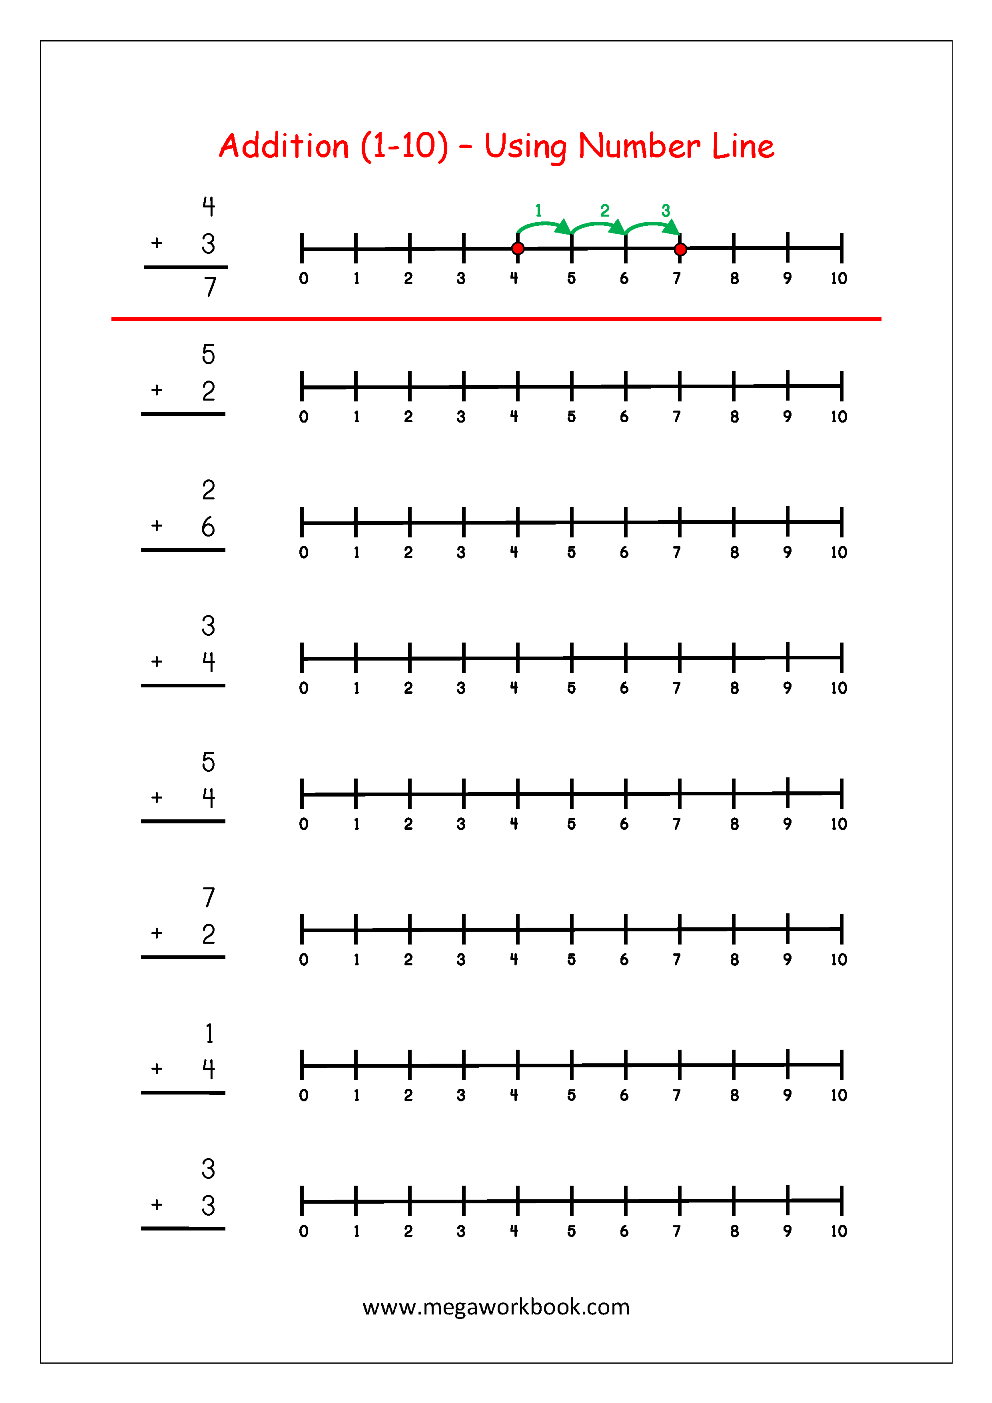 Free Printable Number Addition Worksheets (1-10) For Kindergarten | Free Printable Number Line Worksheets